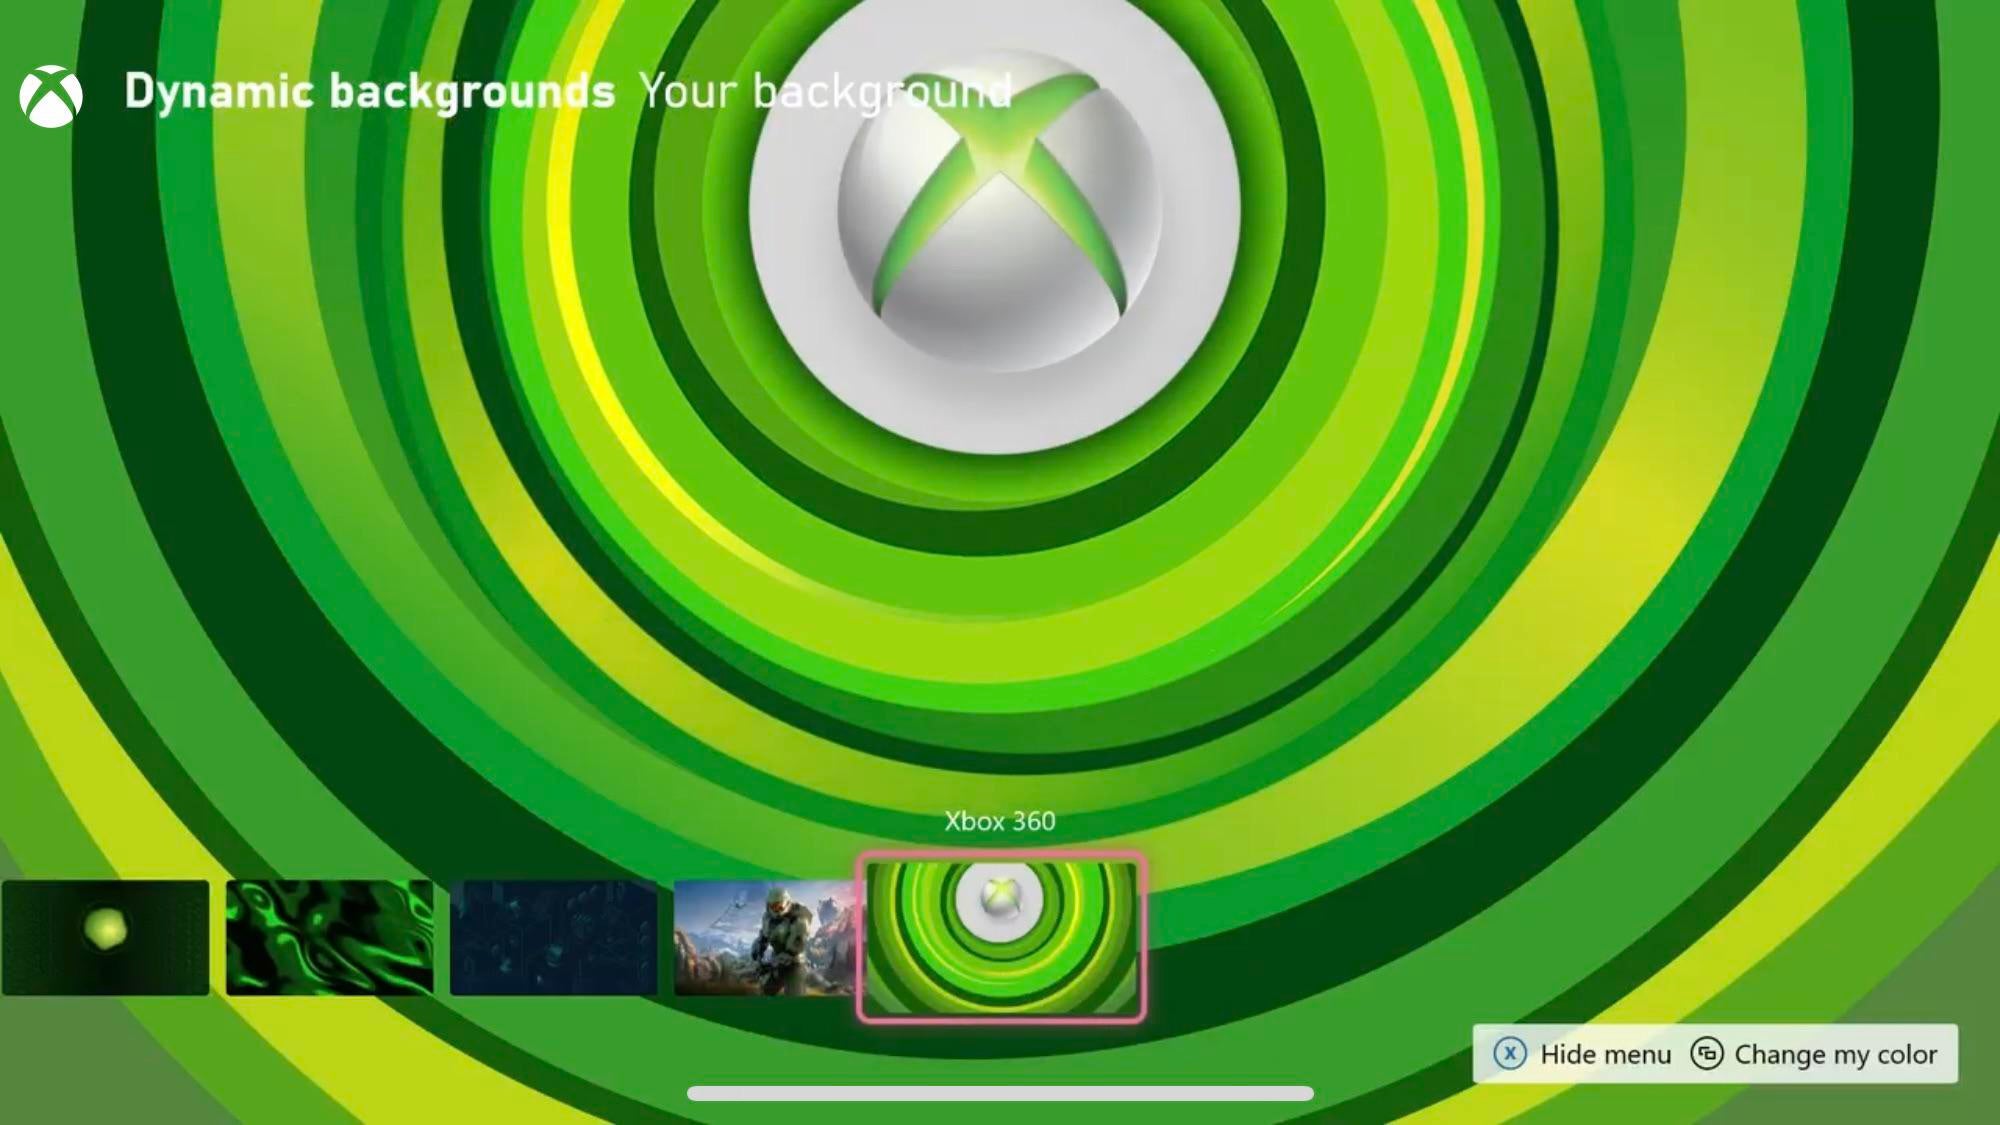 Original Xbox Logo Wallpapers